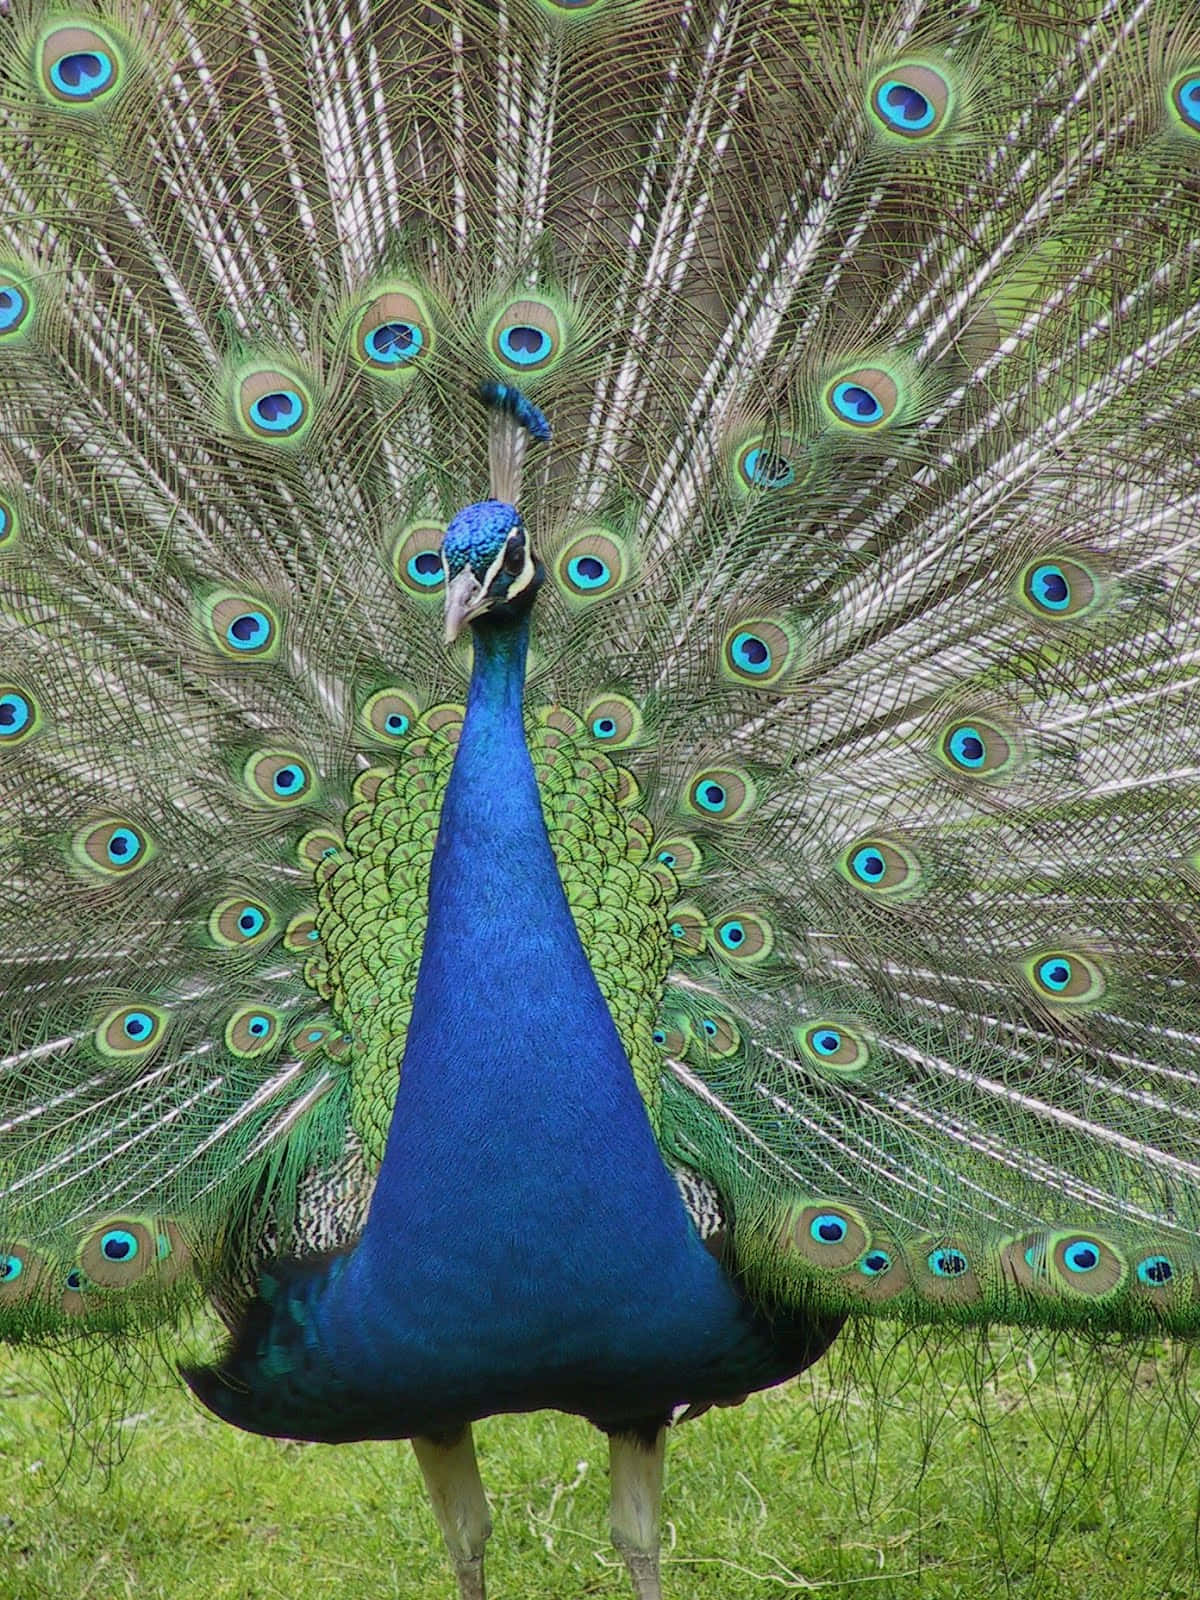 A beautiful Peacock Bird, majestic and proud